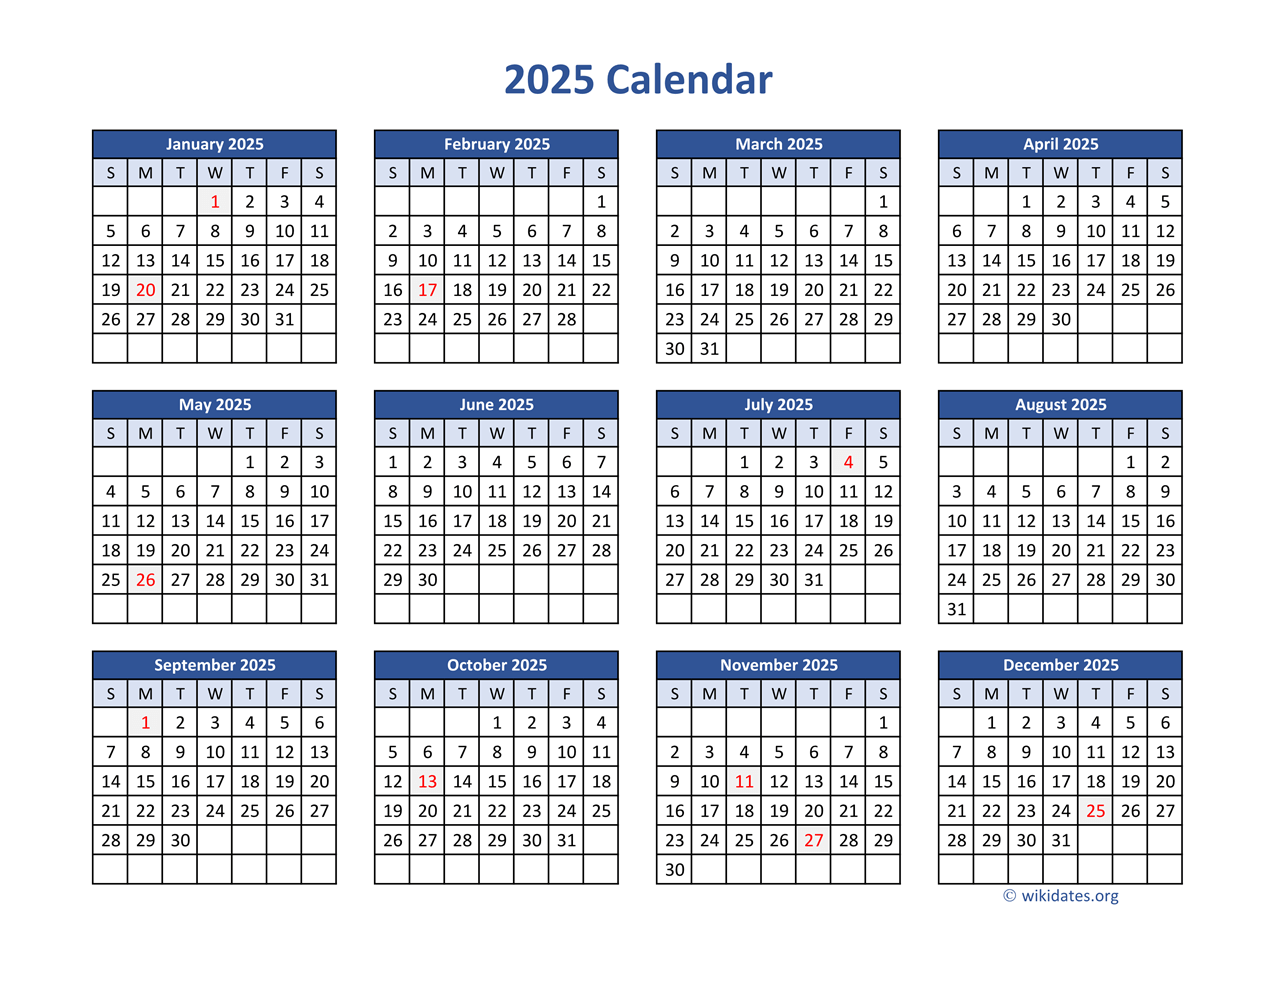 Wikidates Org 2025 Calendar